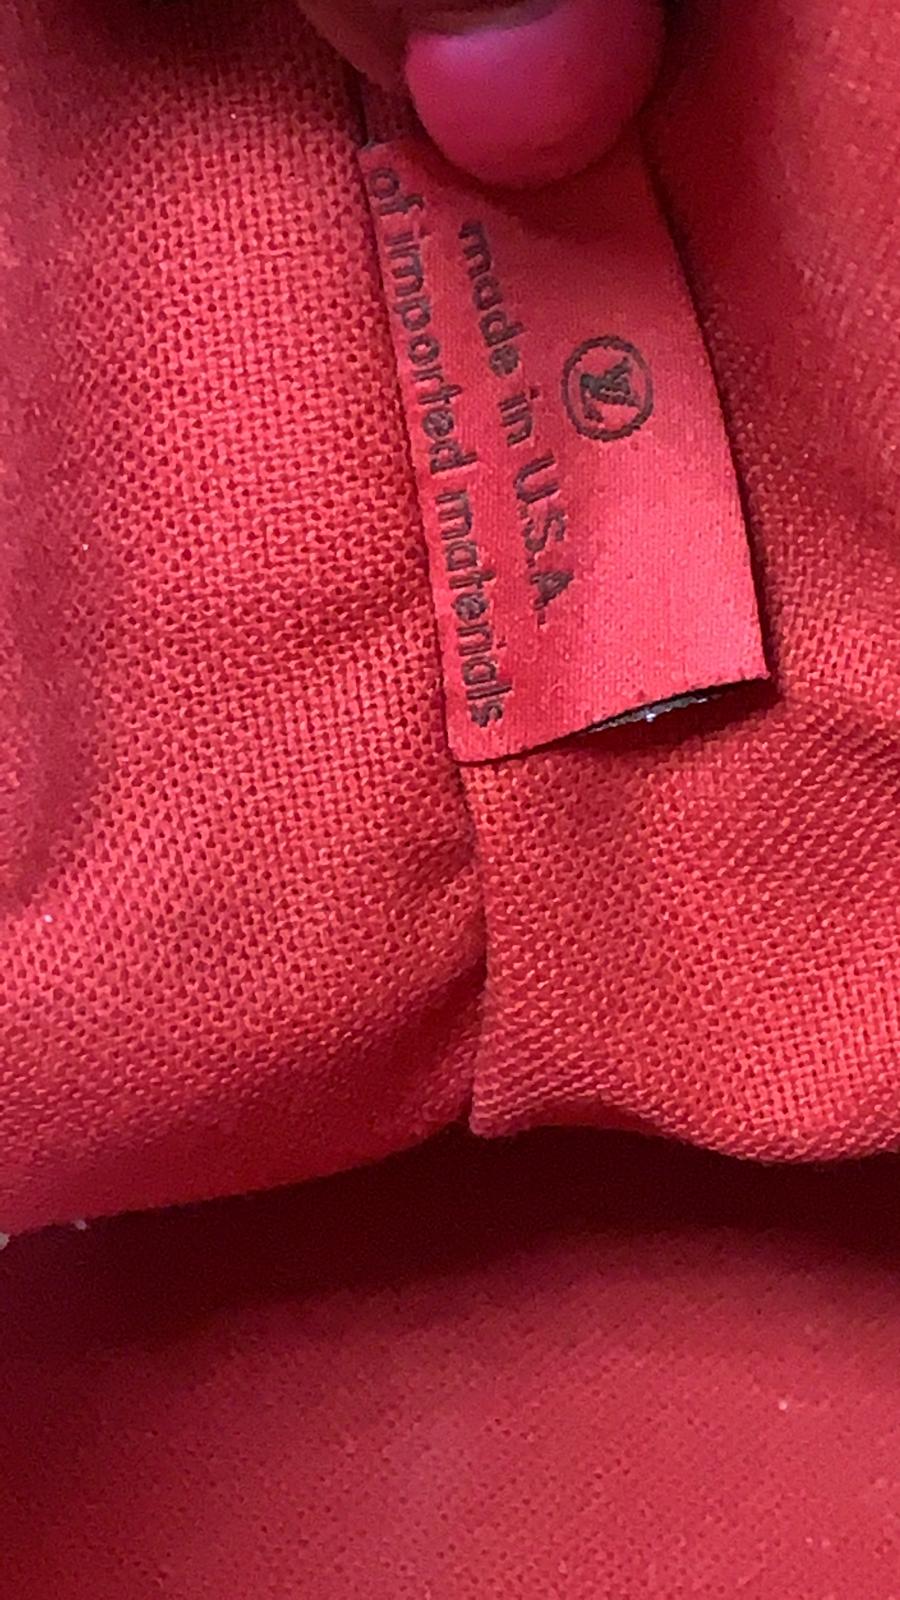 Louis Vuitton Verona PM Damier Ebene Tote Bag N41117 53400